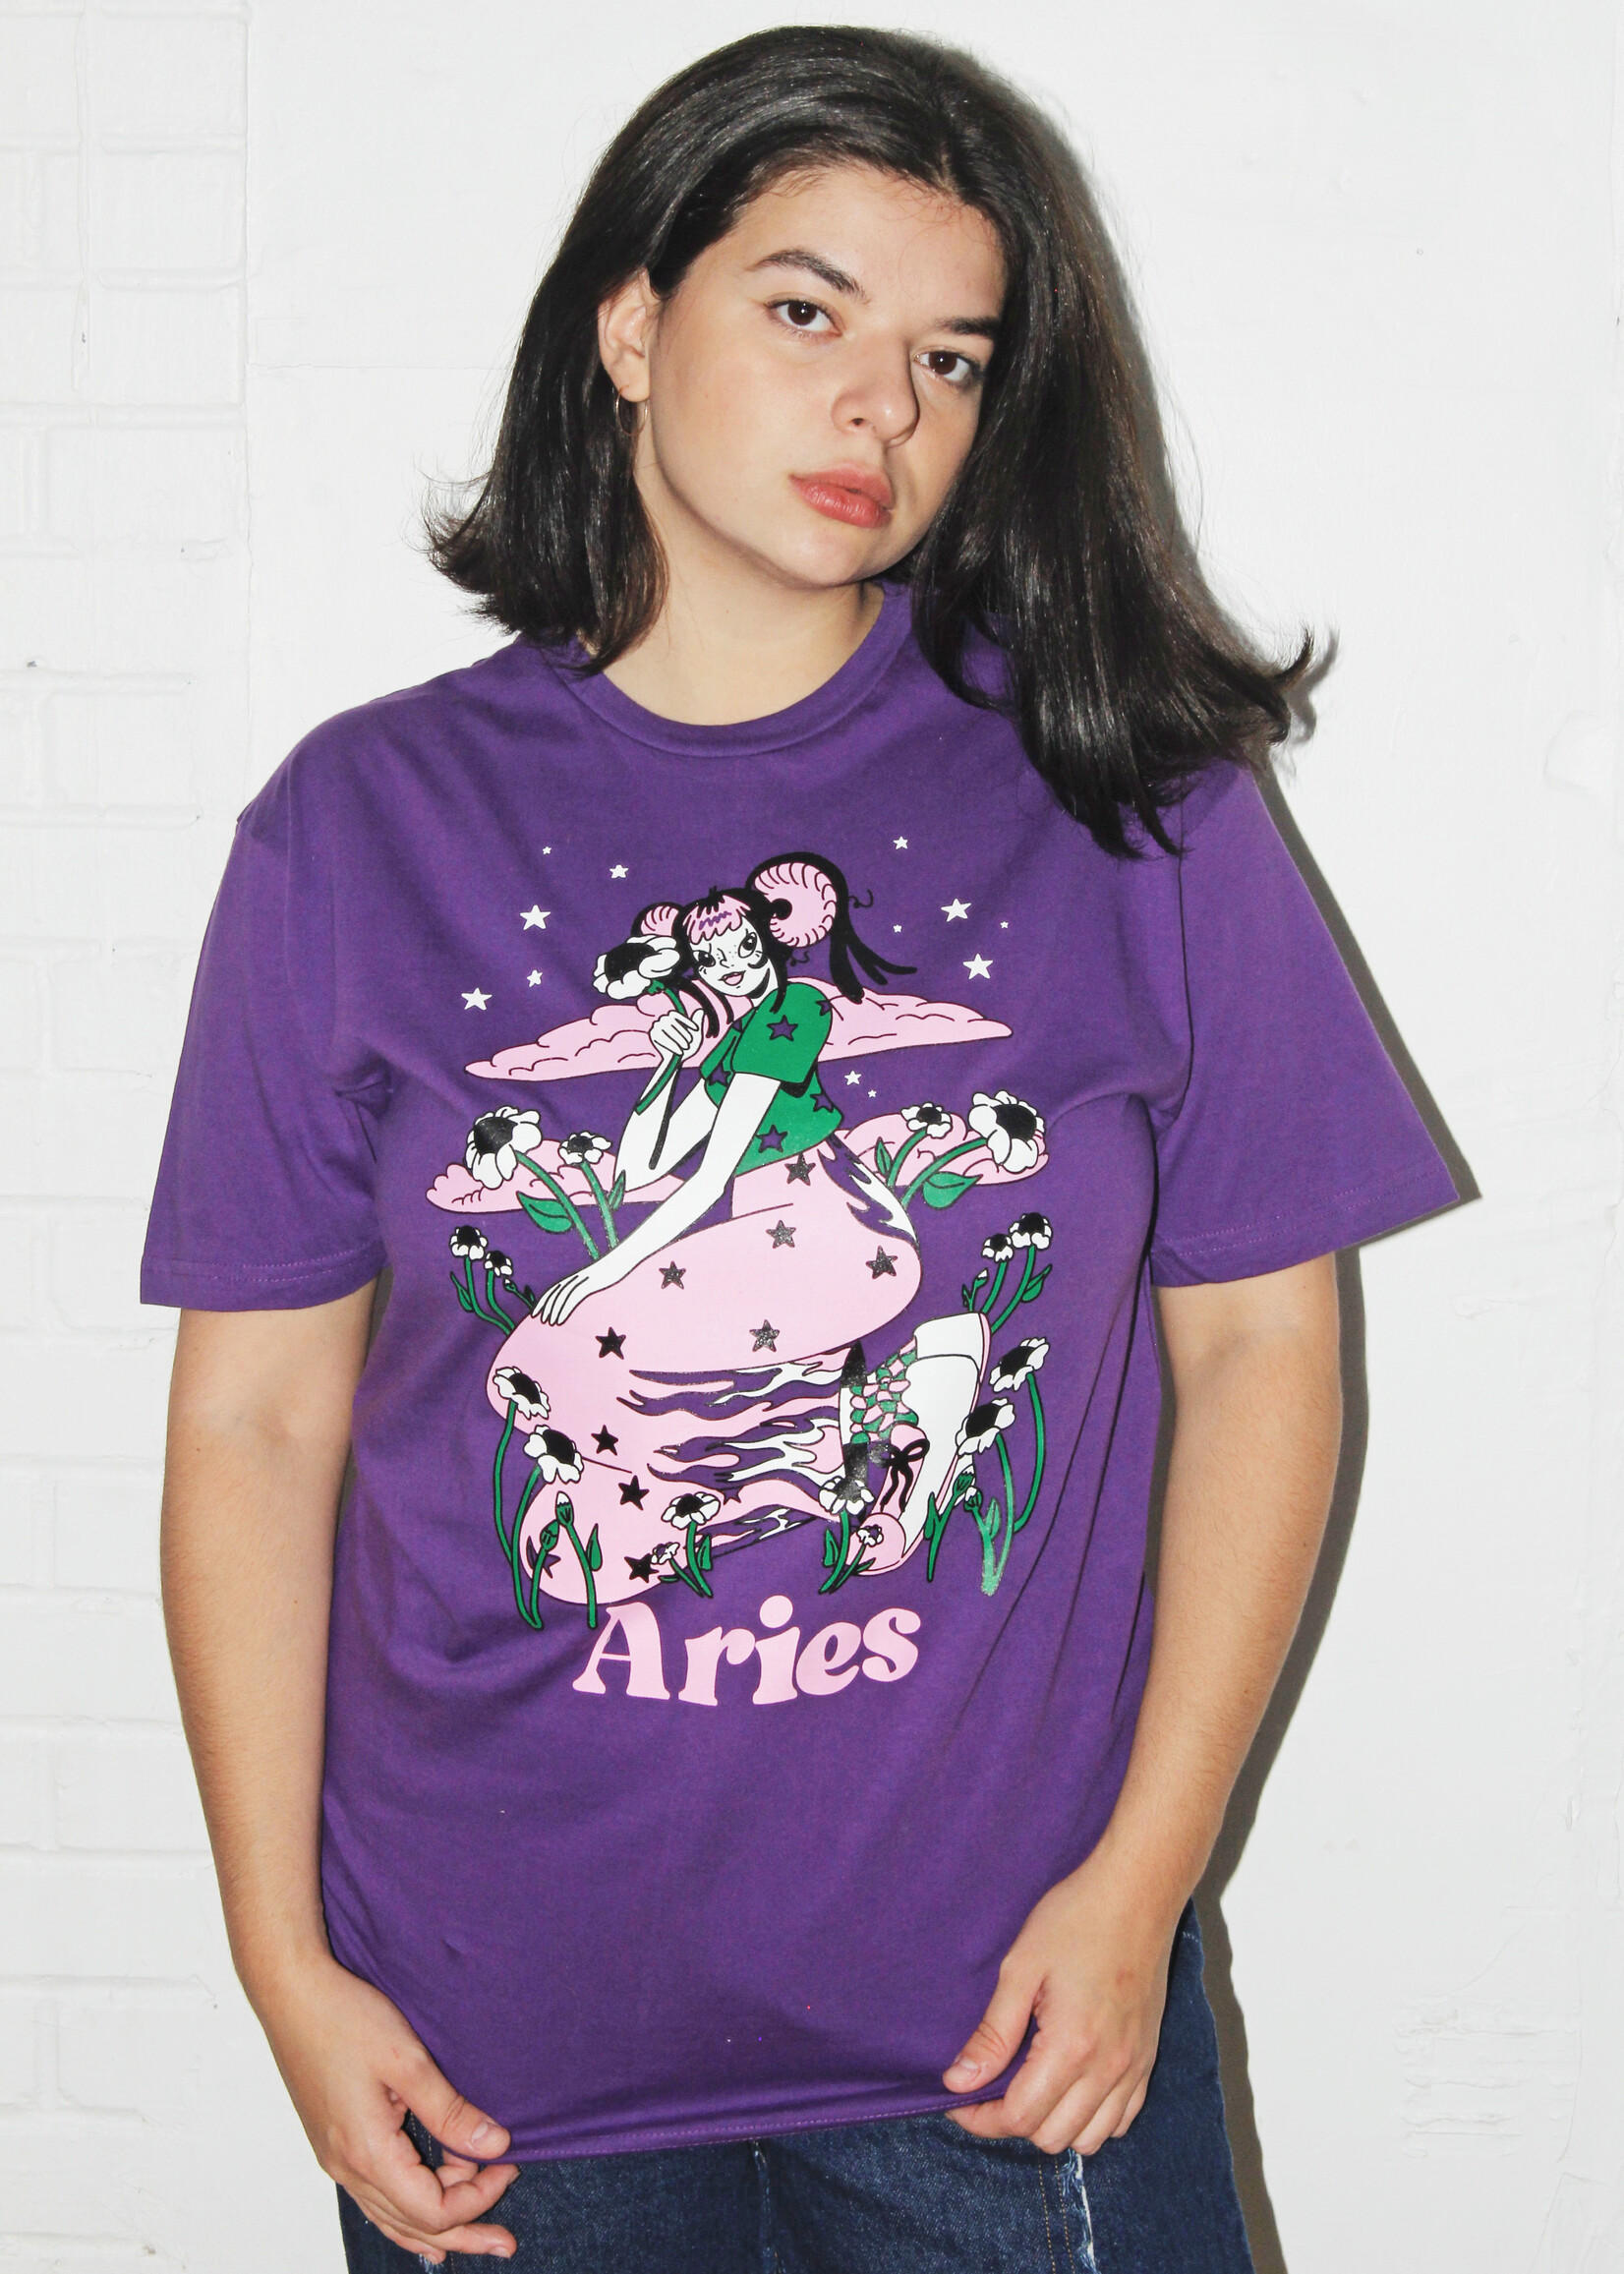 Spll Girl Spll Girl Zodiac T-Shirts: Aries